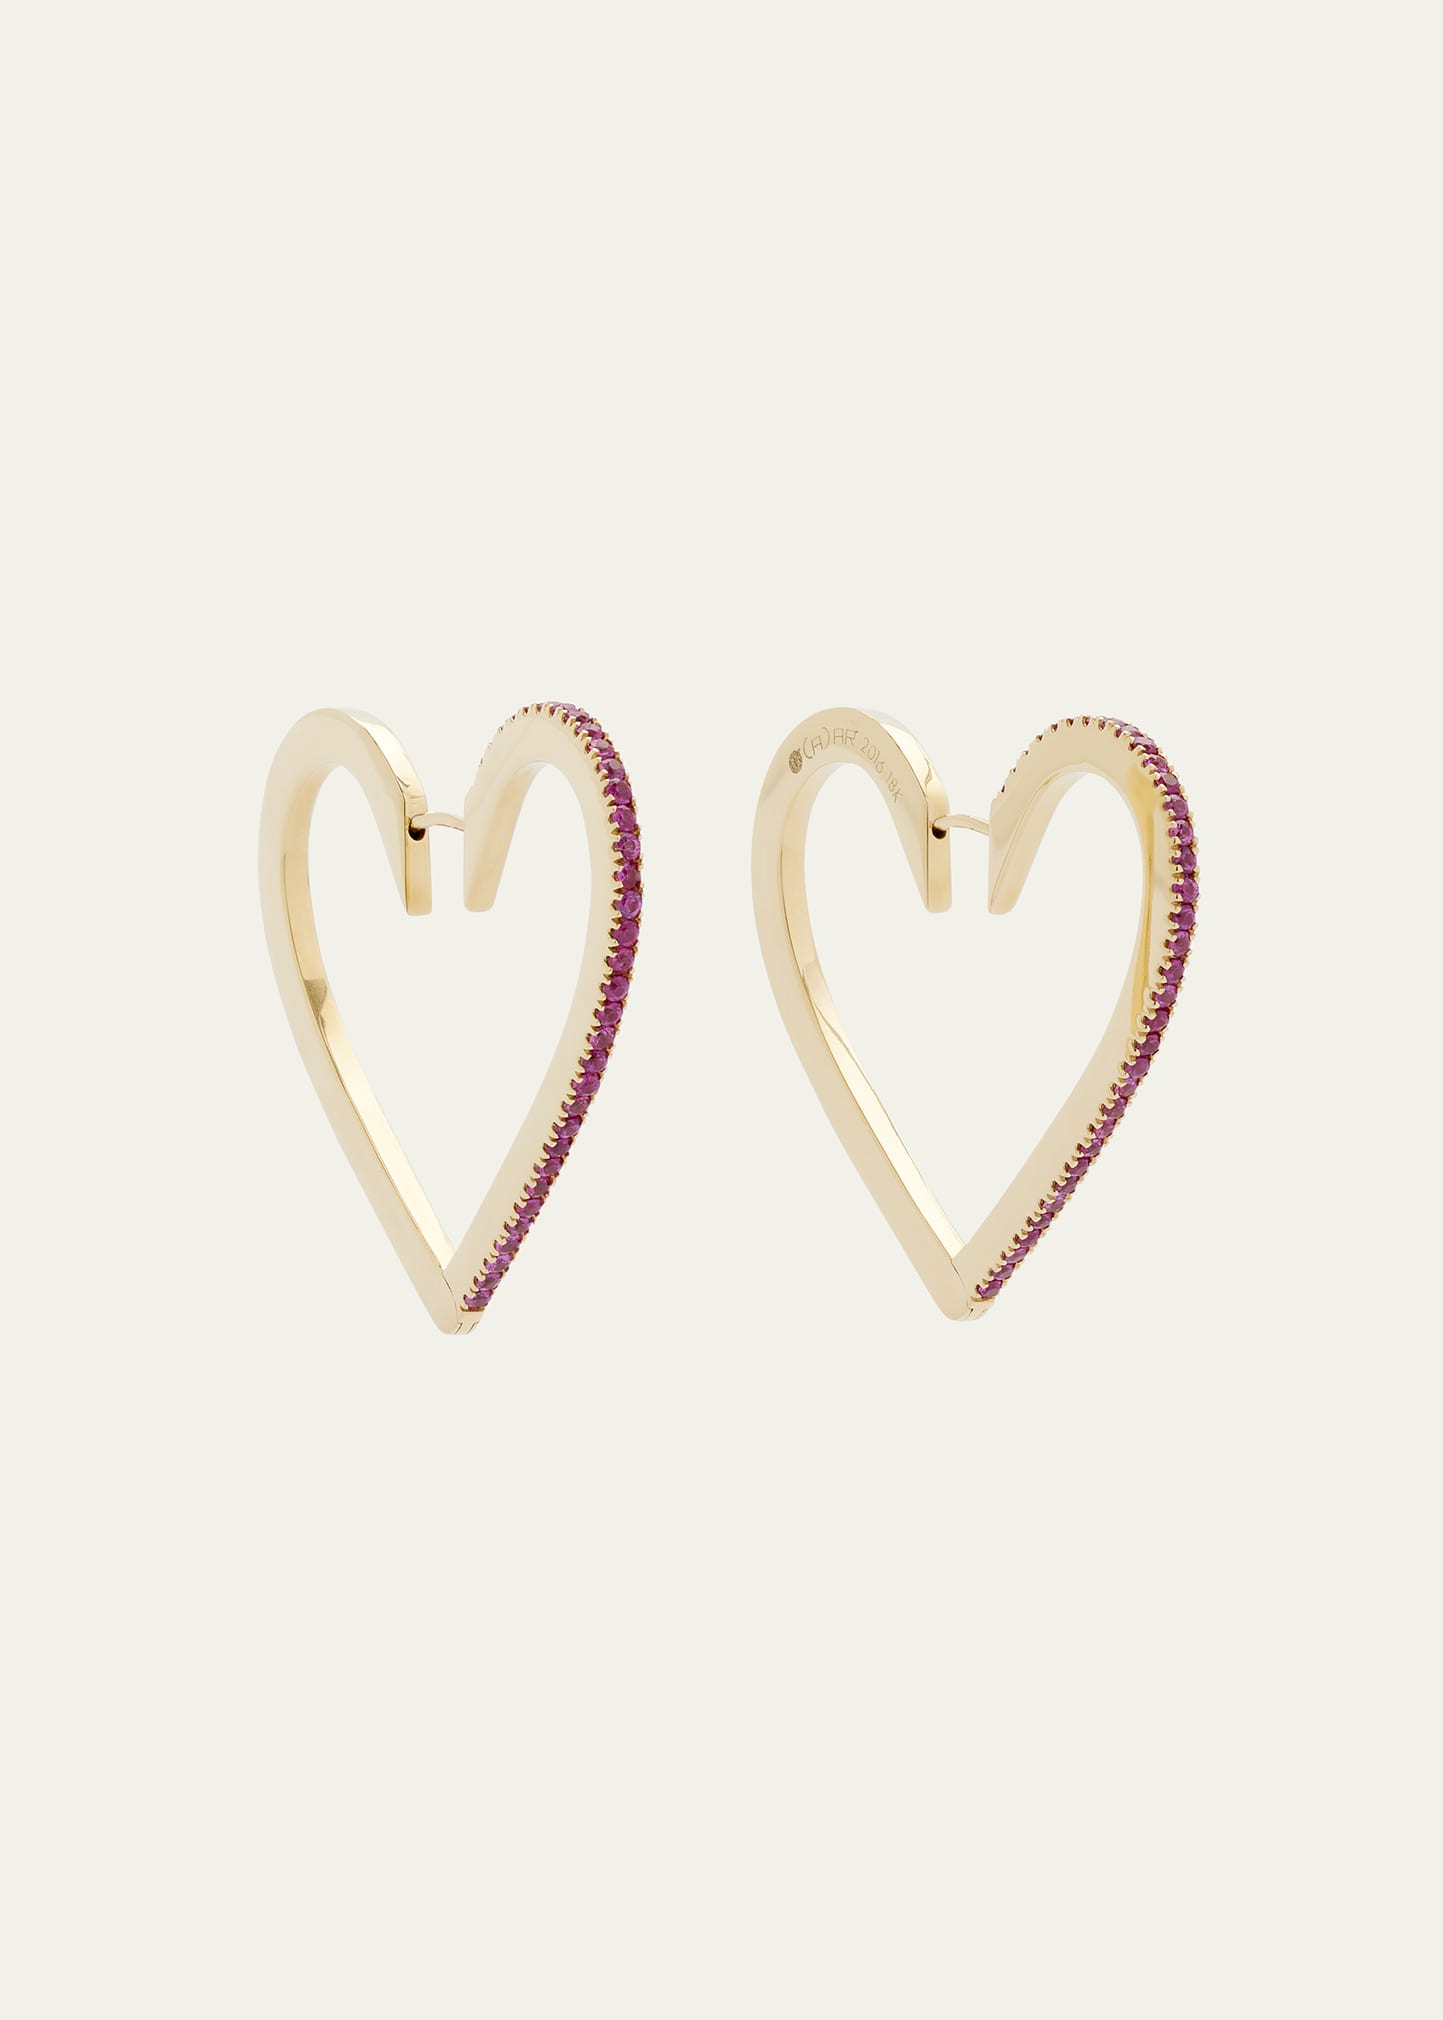 CADAR 18K Yellow Gold Large Heart Hoop Earrings with Rubies